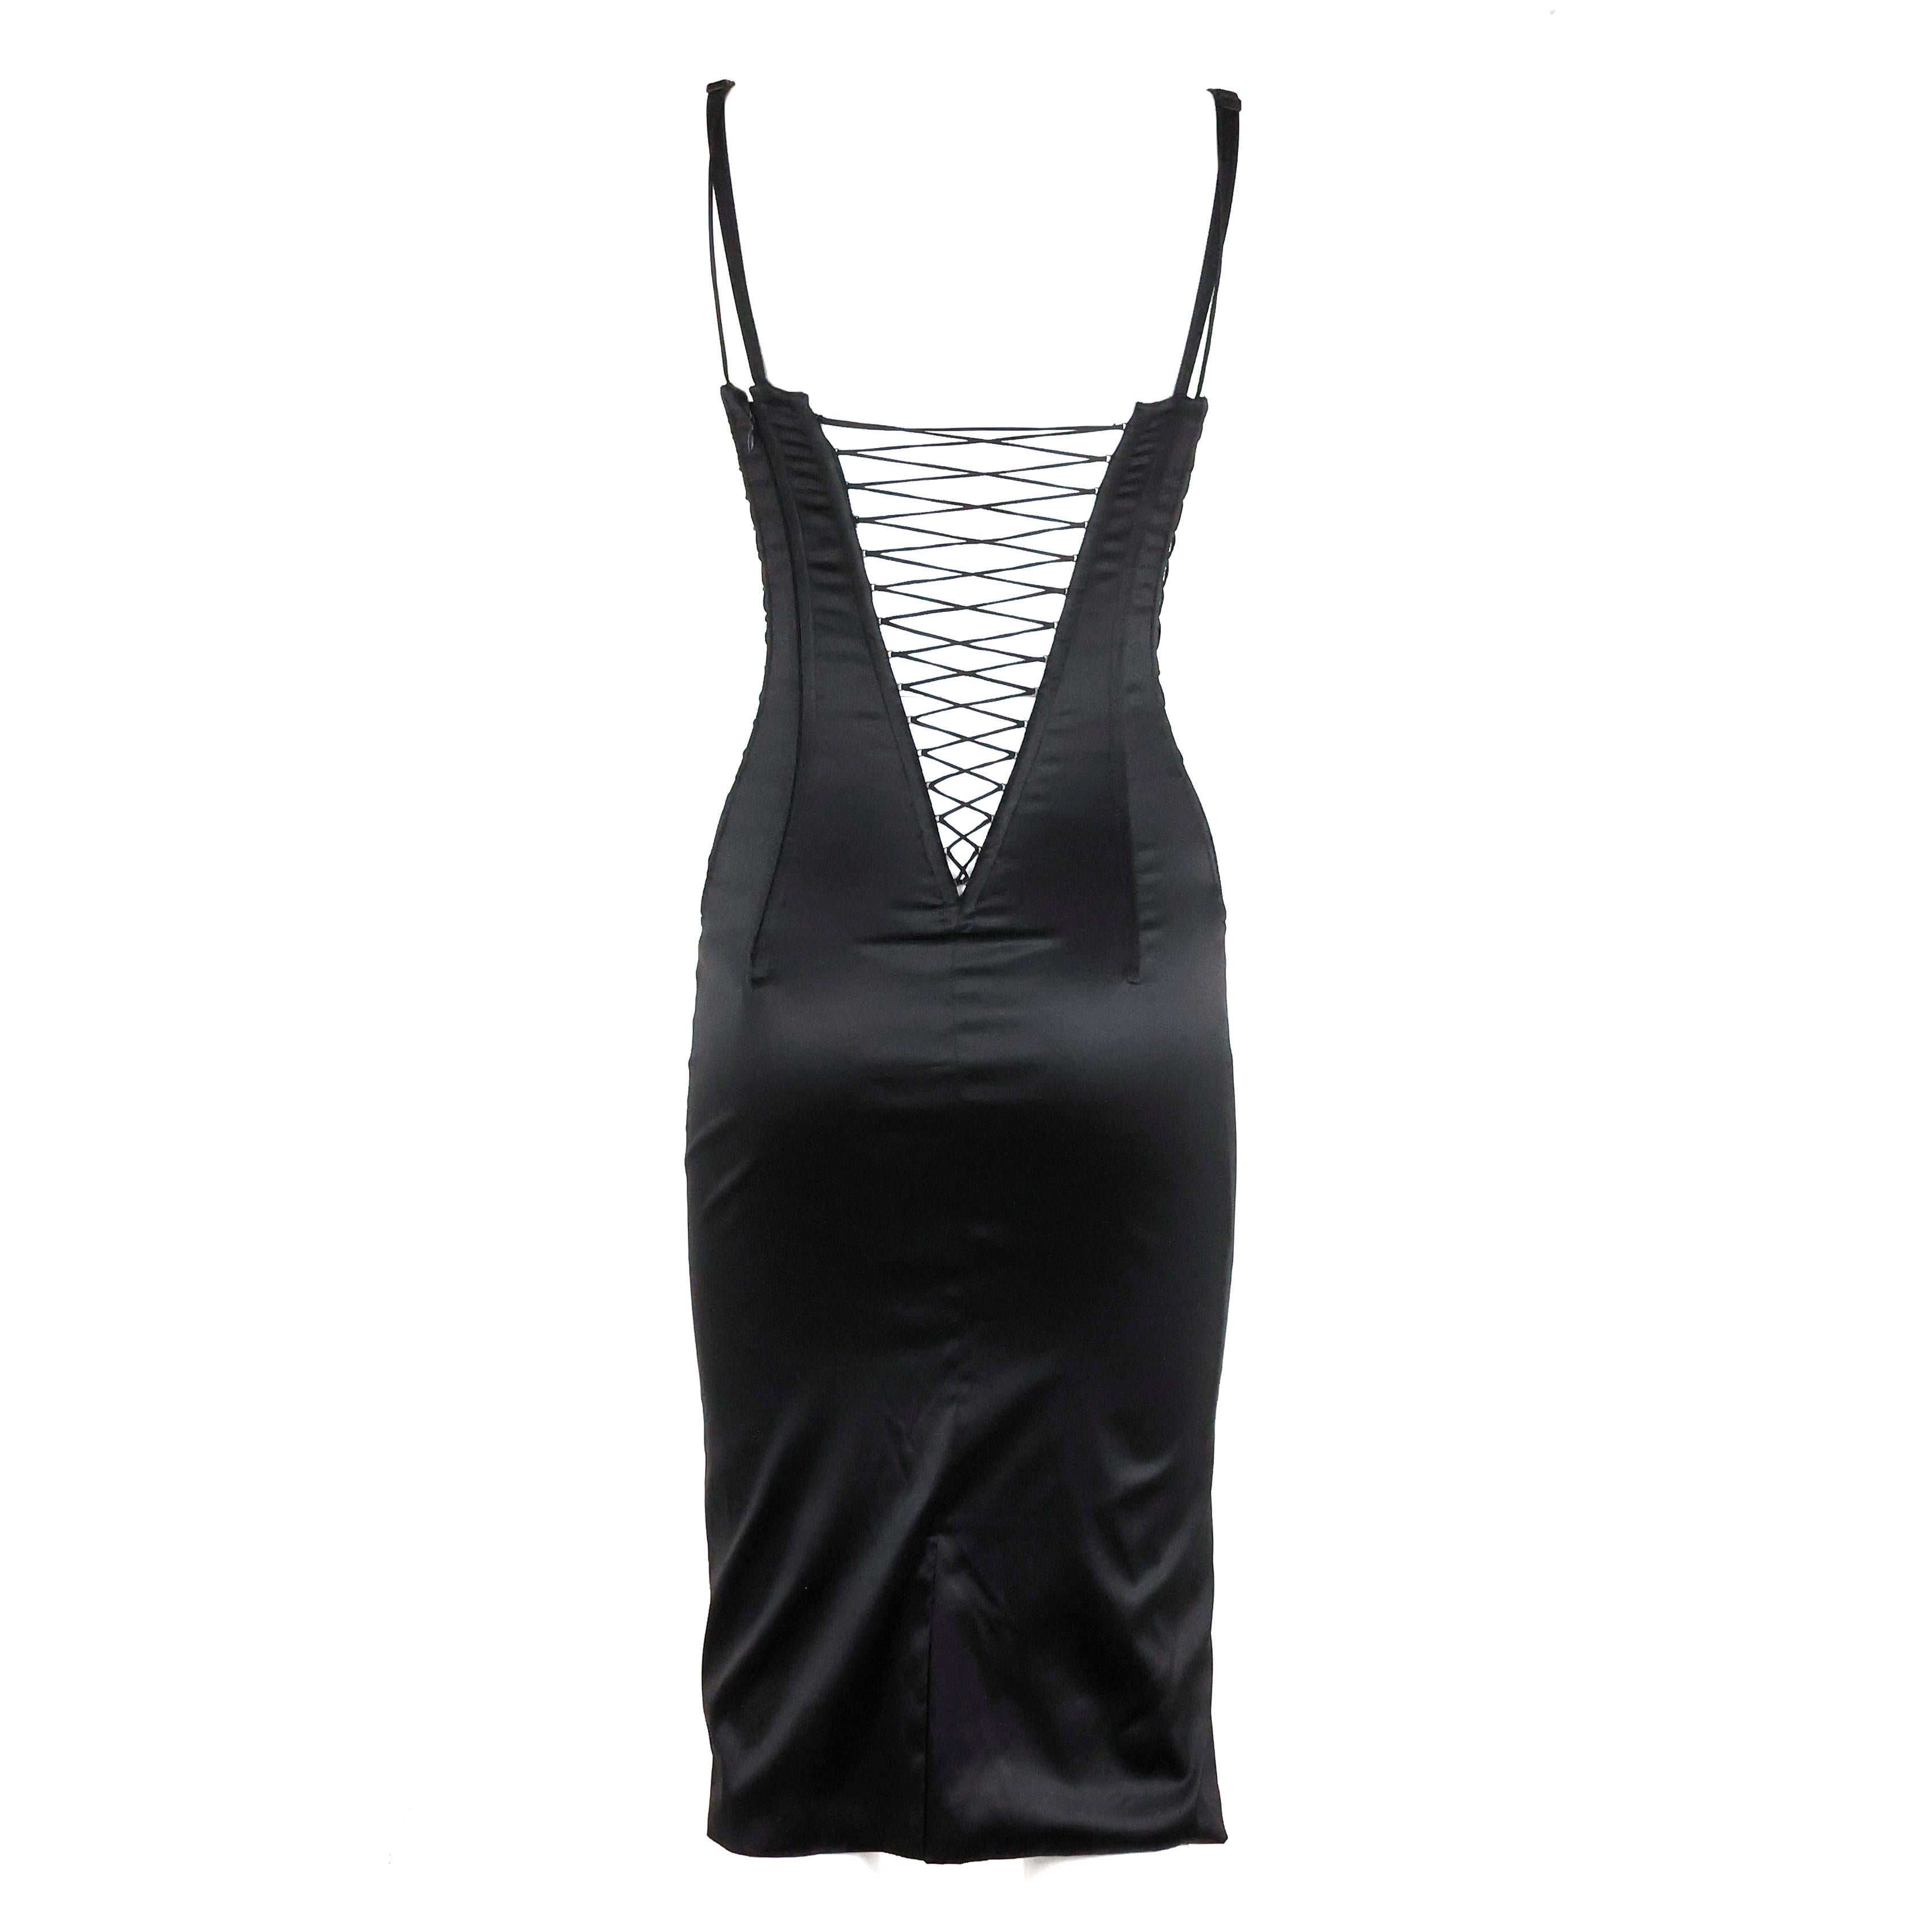 Rare Dolce e Gabbana black lace-up silk corset dress. Size 40 IT

Condition:
Really good.